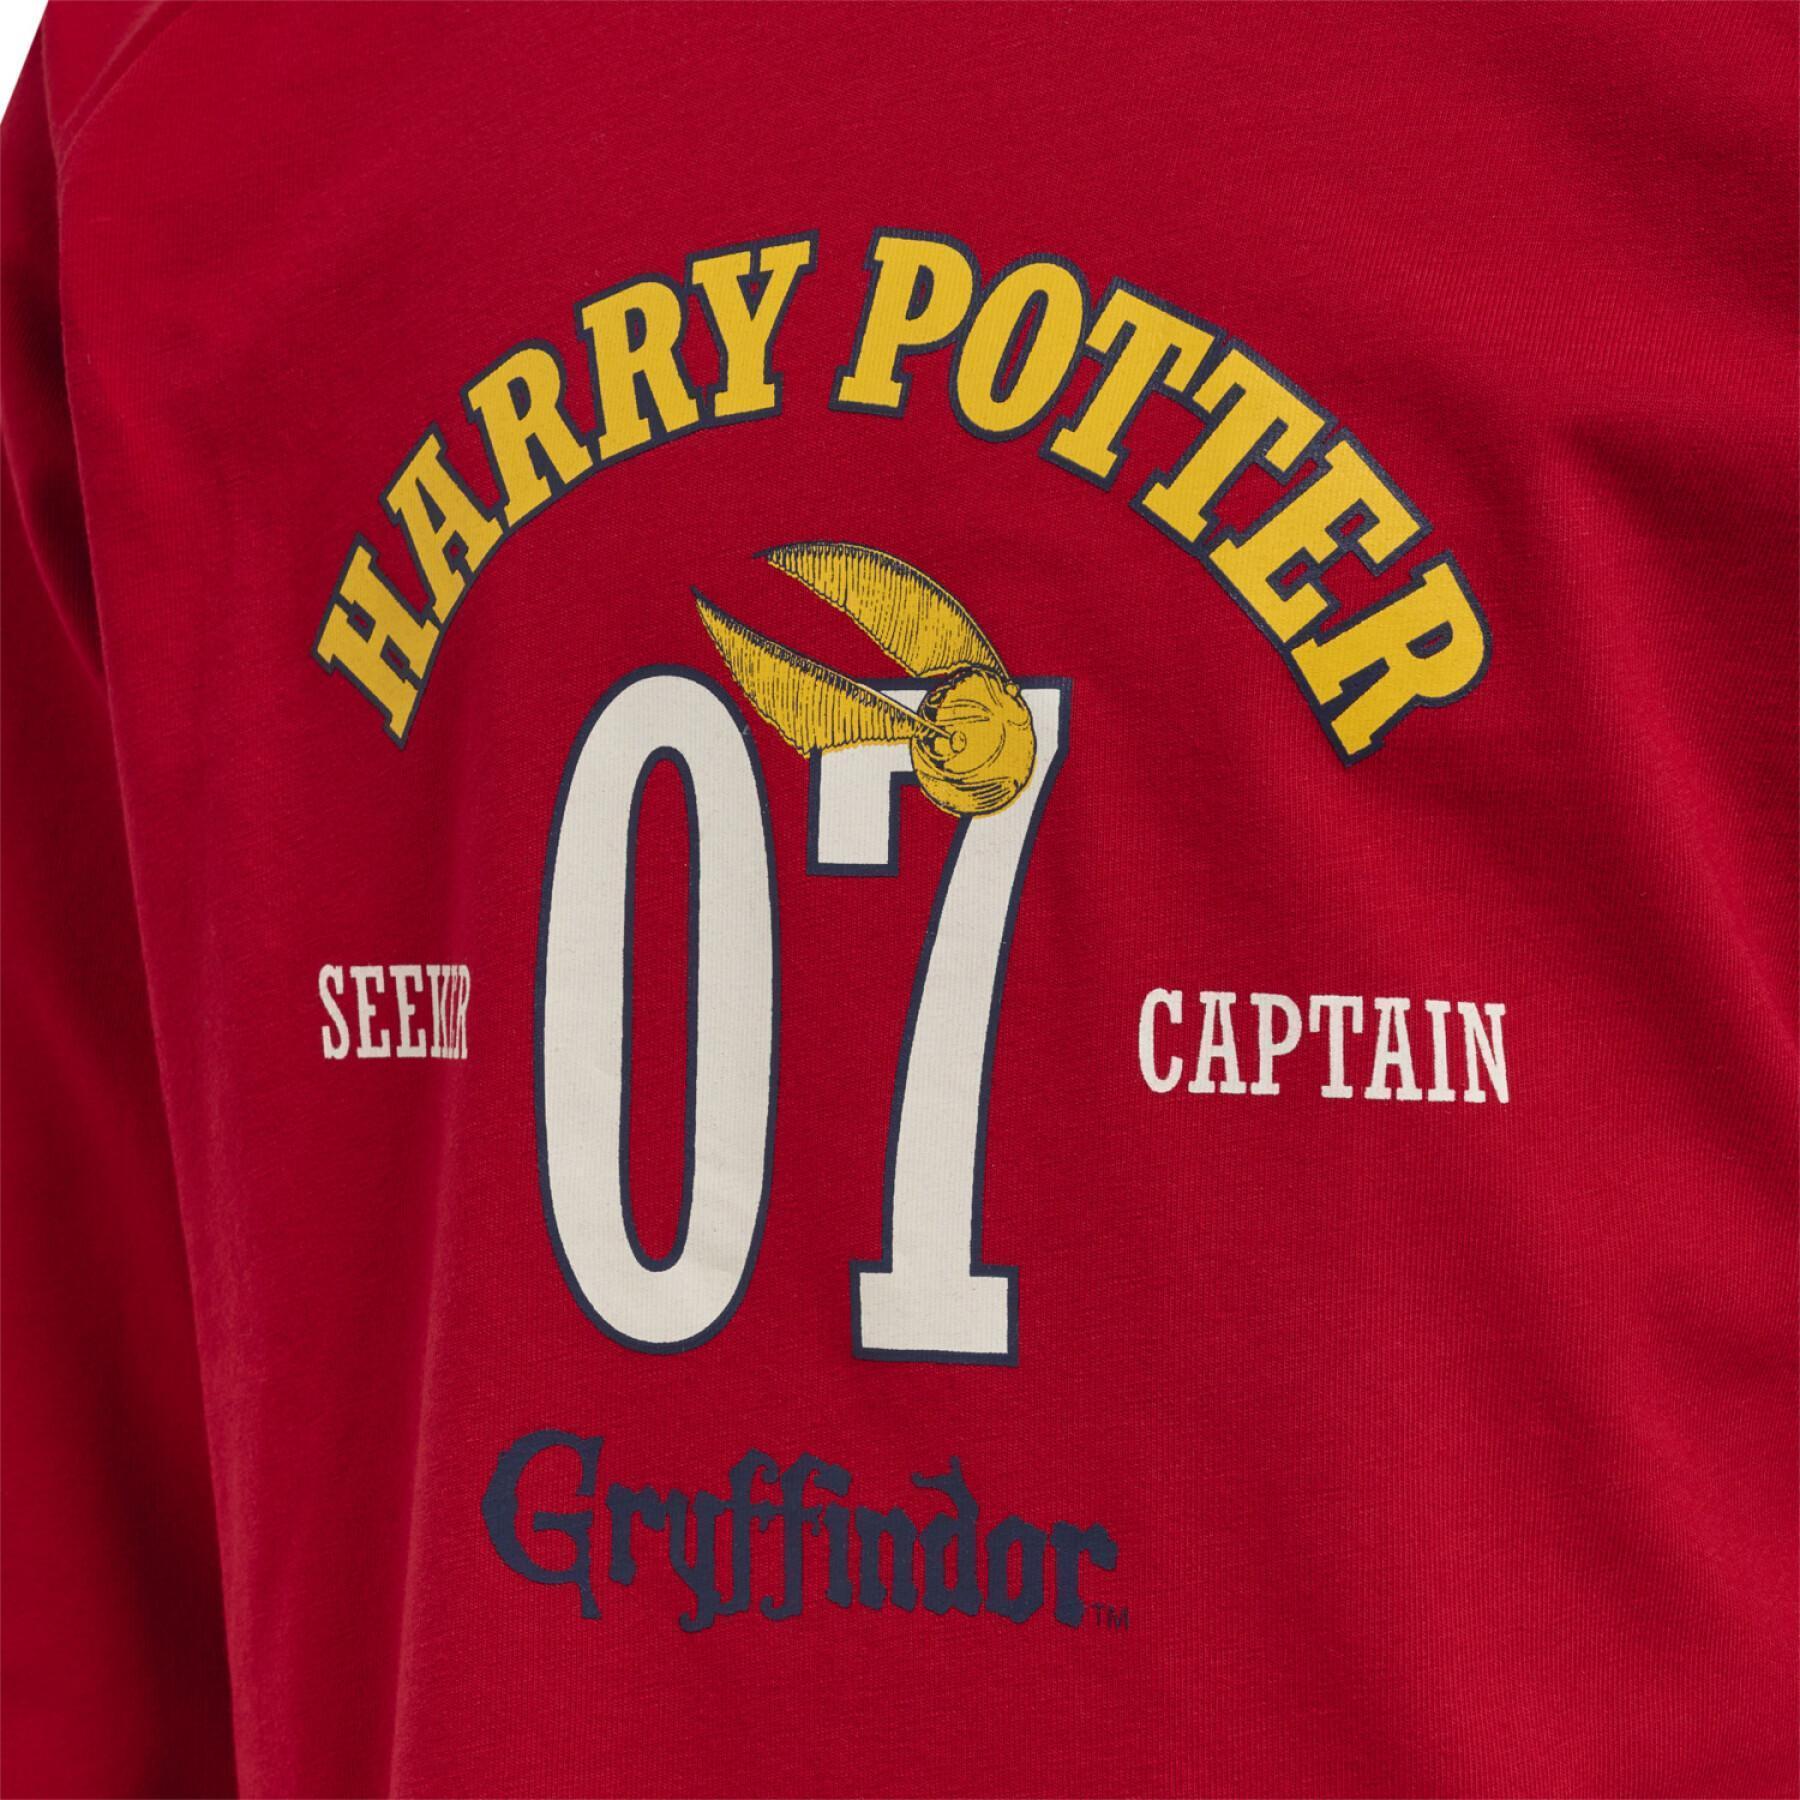 Kinderpyjama Hummel Harry Potter Nolen